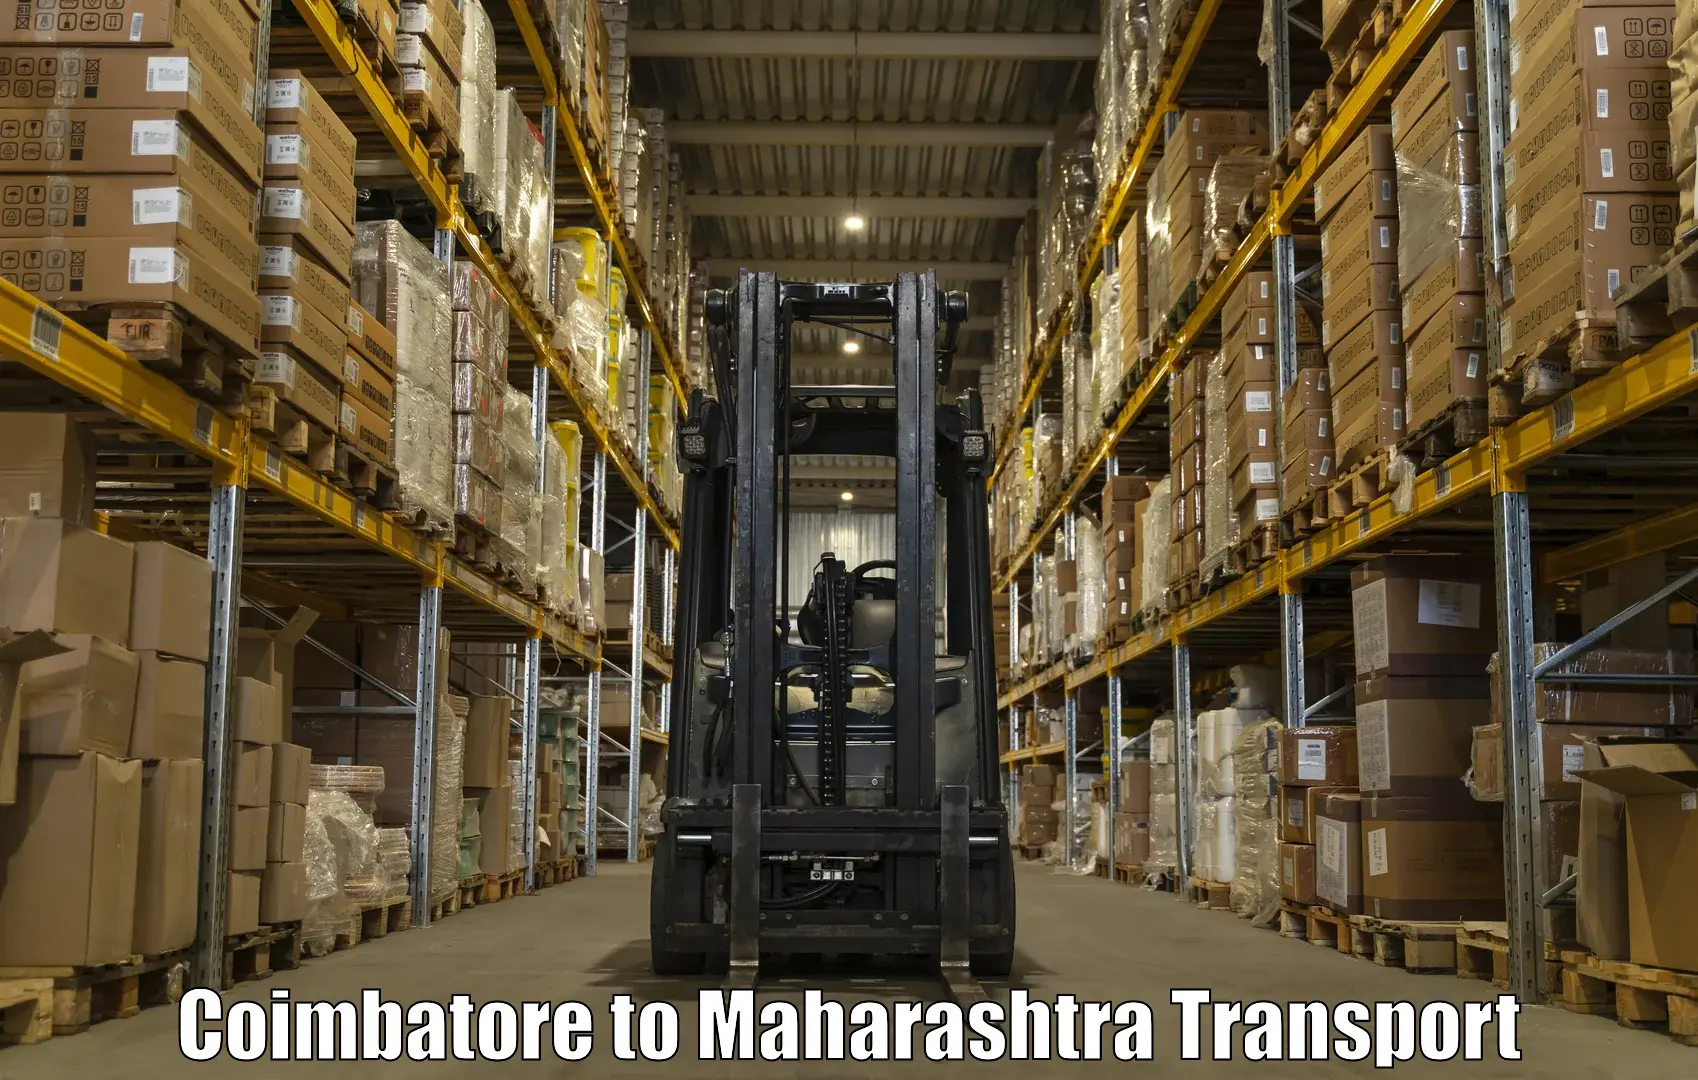 Furniture transport service Coimbatore to Alibag